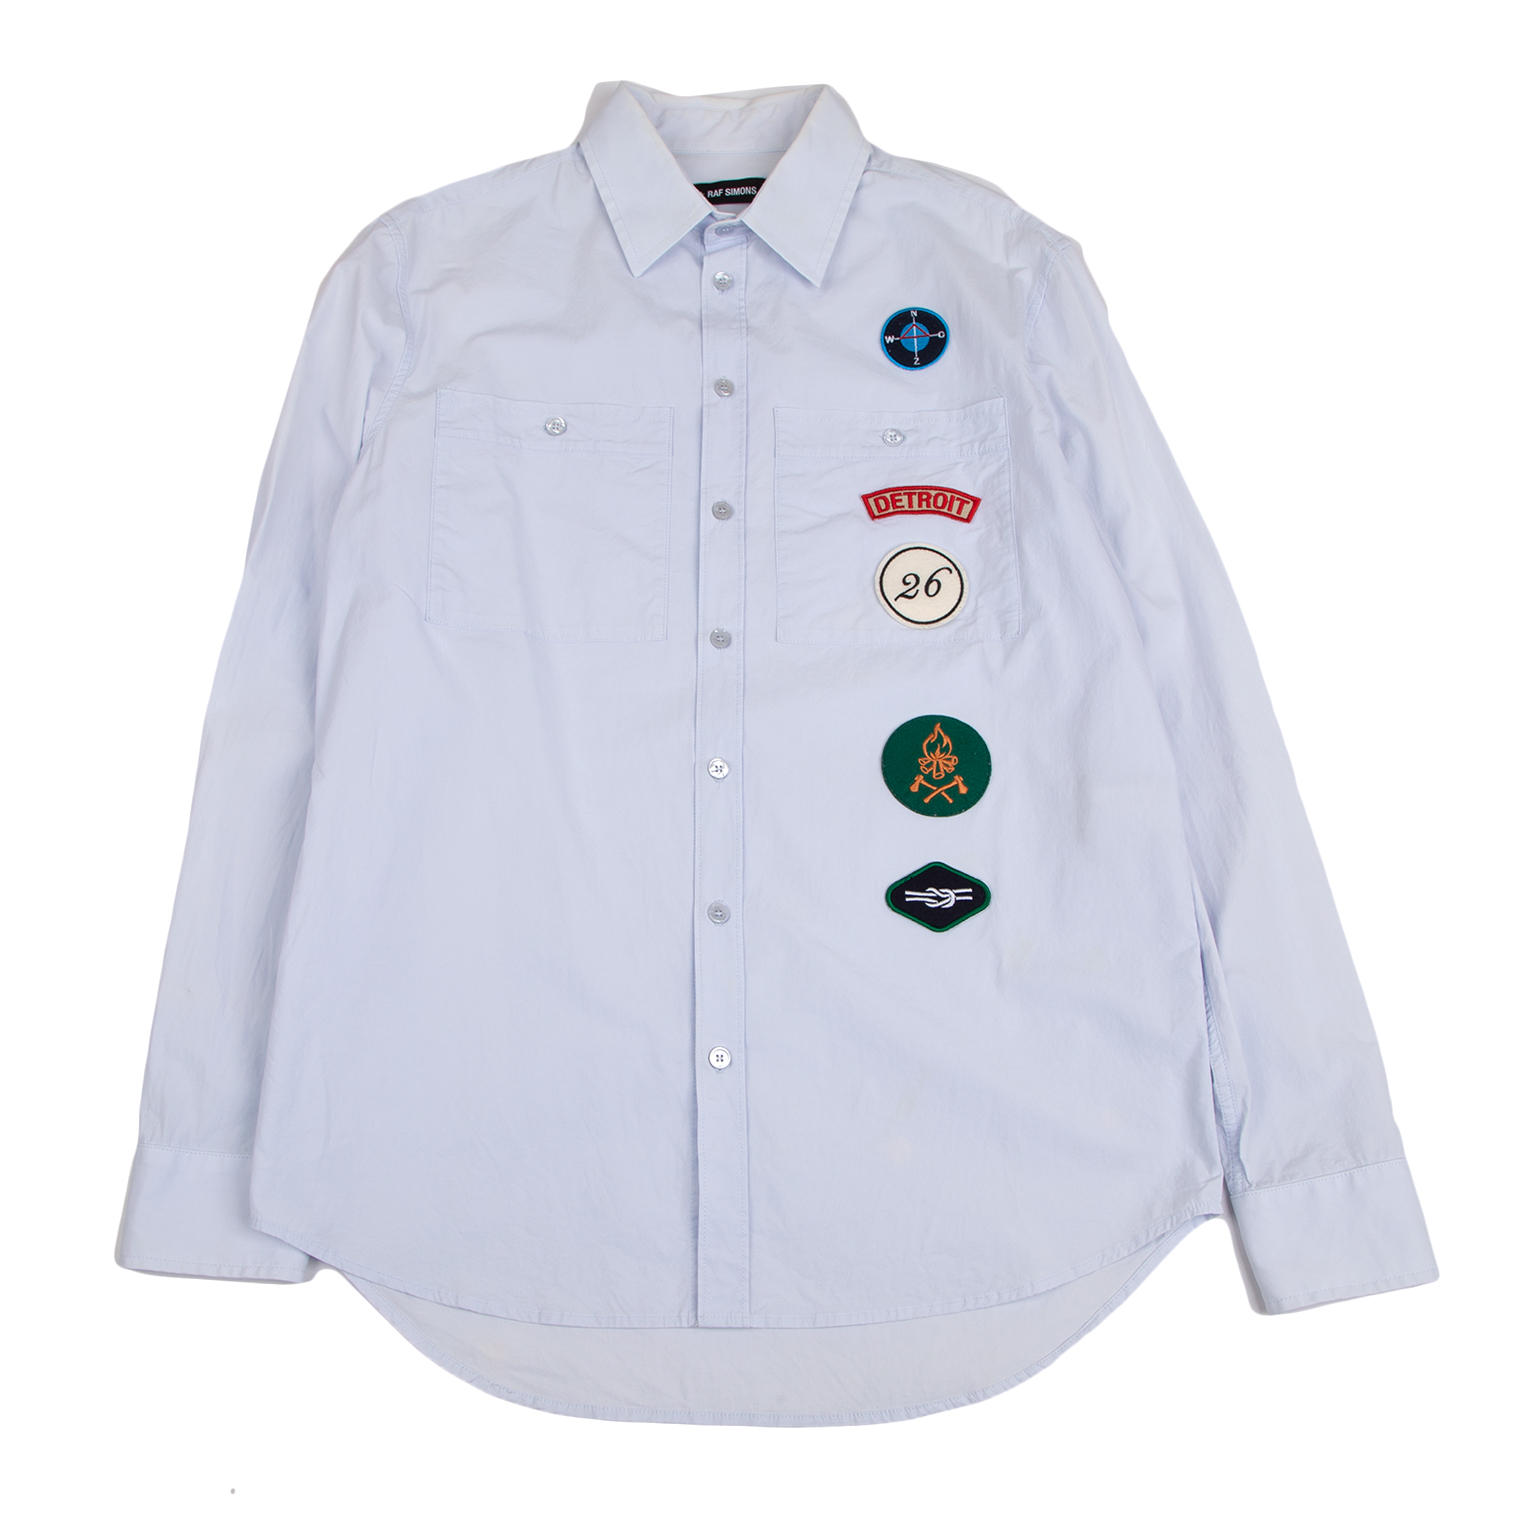 RAF SIMONS カジュアルシャツ 46(M位) 青x白(チェック)